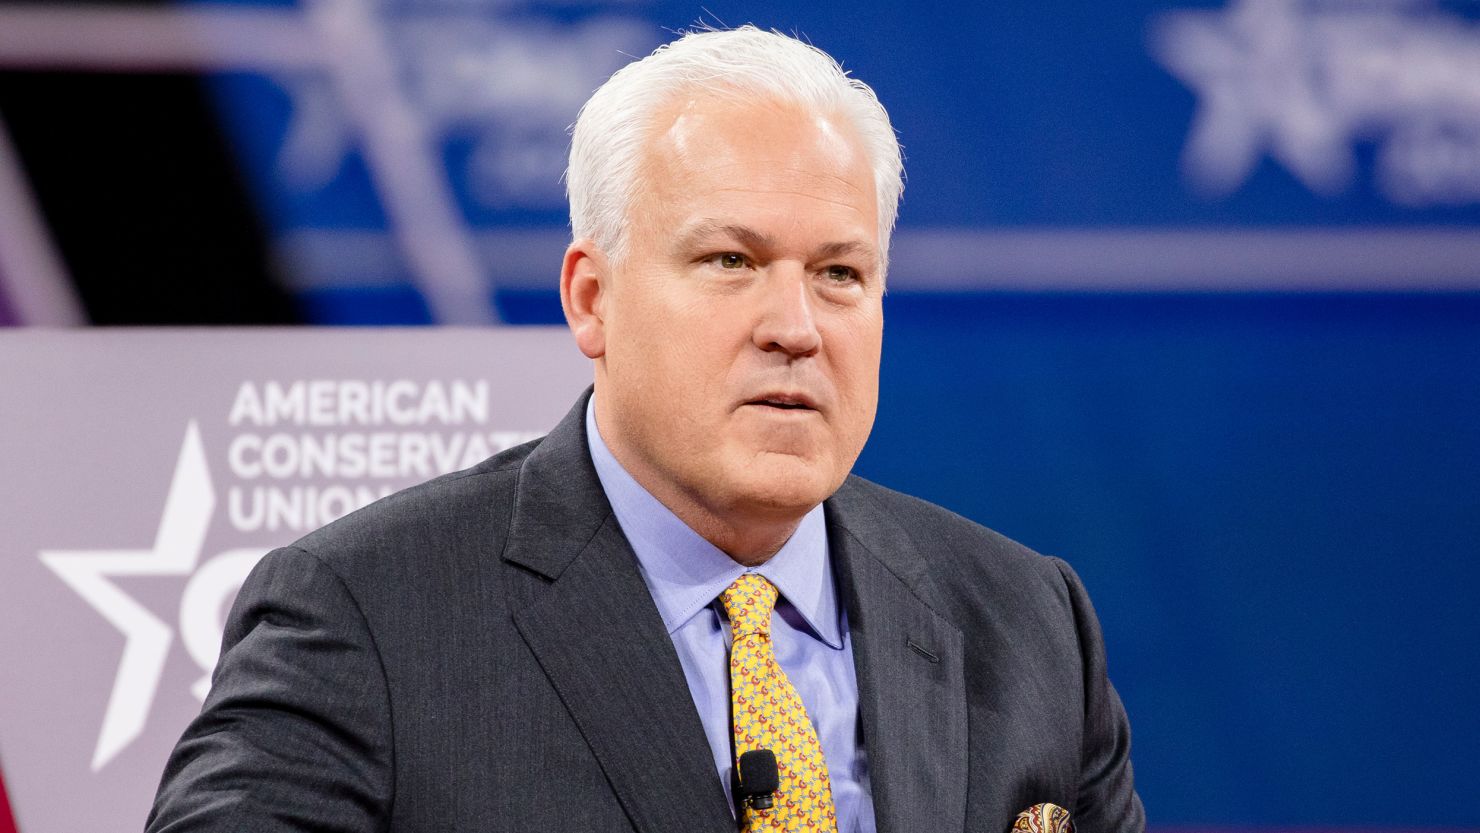 Matt Schlapp, Chairman of the American Conservative Union